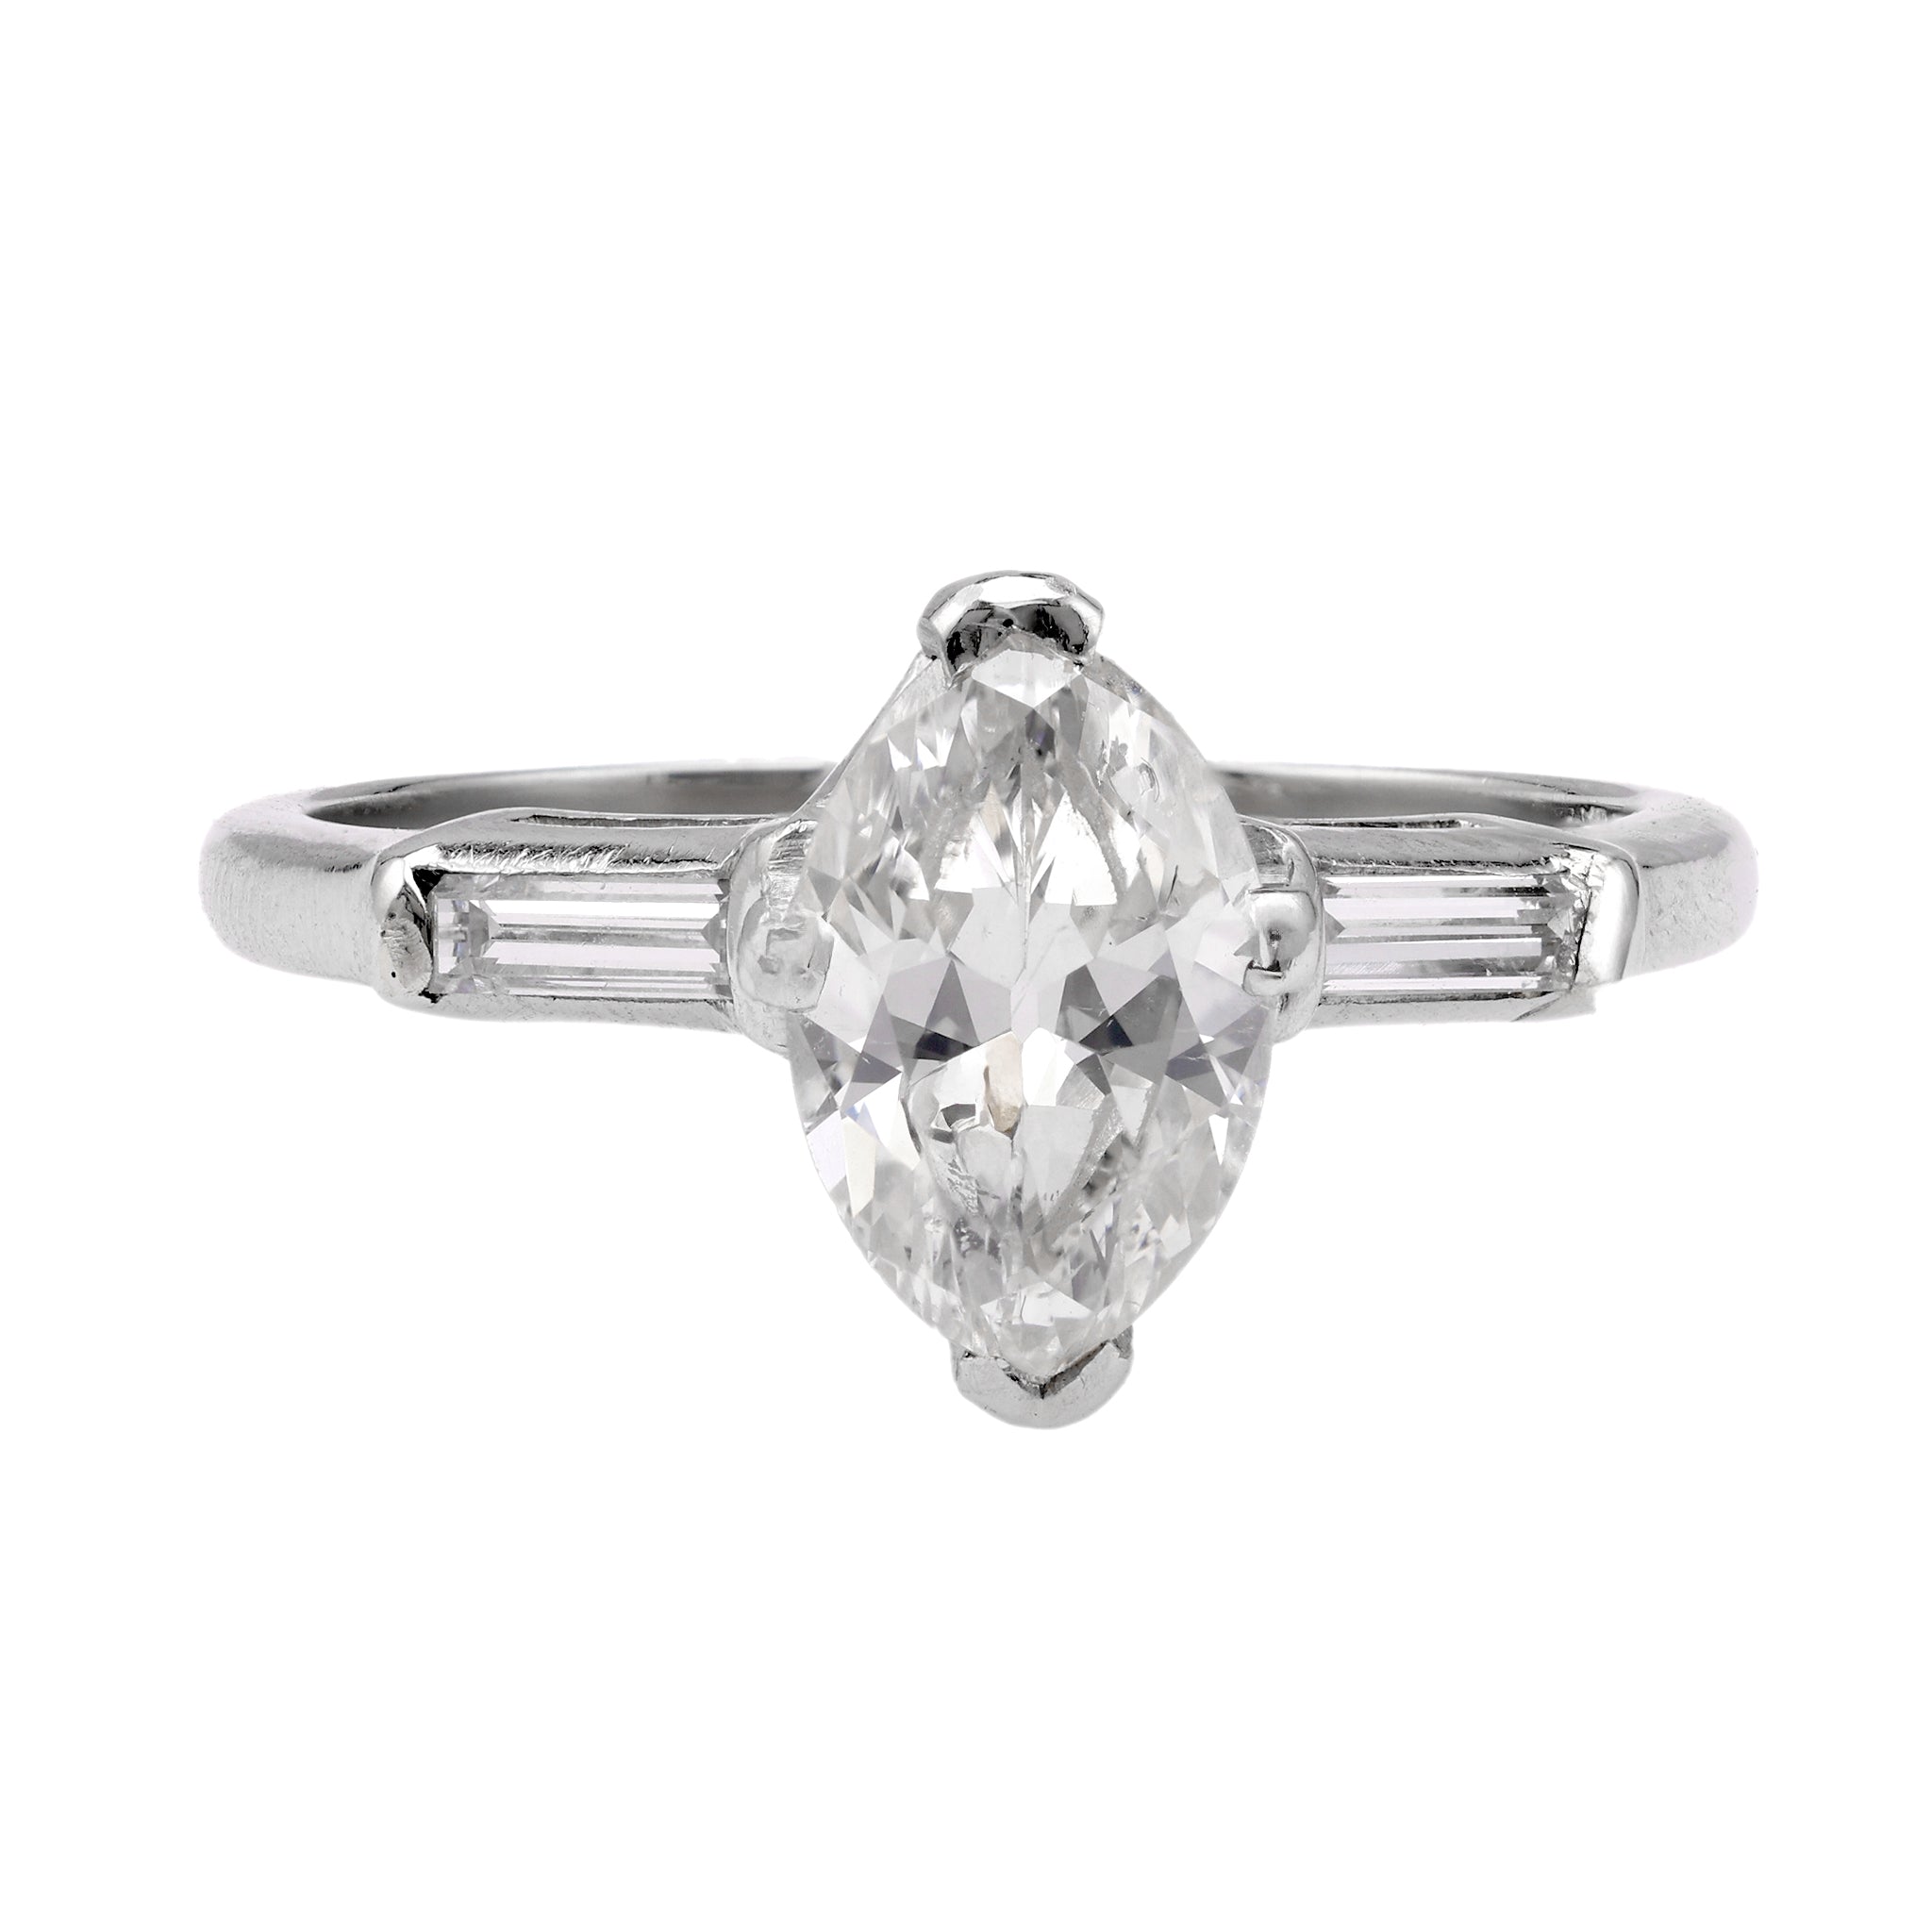 Art Deco GIA 1.04 Carat Marquise Cut Diamond Platinum Ring Rings Jack Weir & Sons   